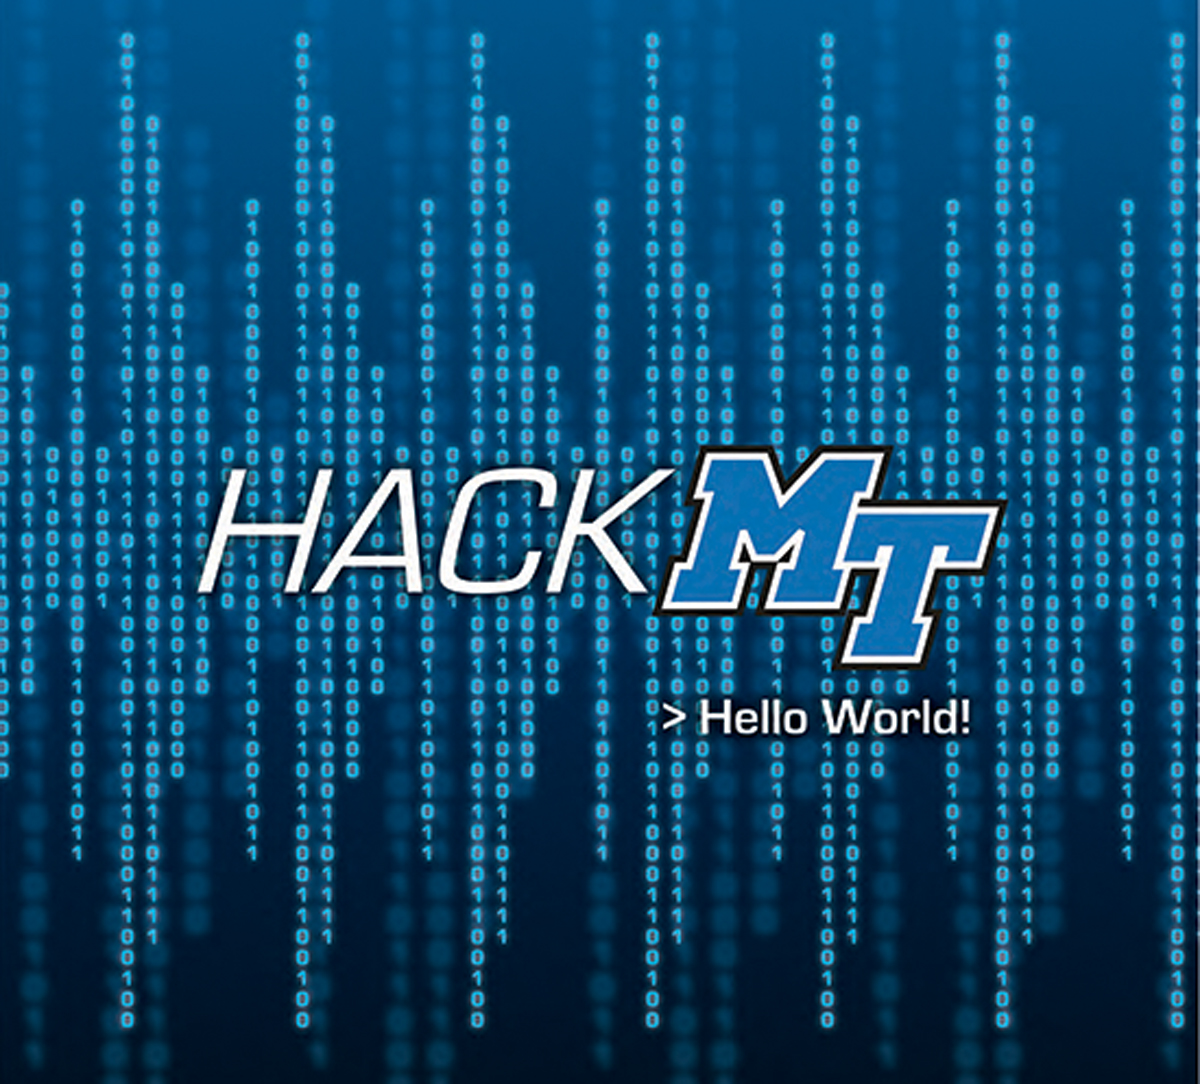 HackMT logo